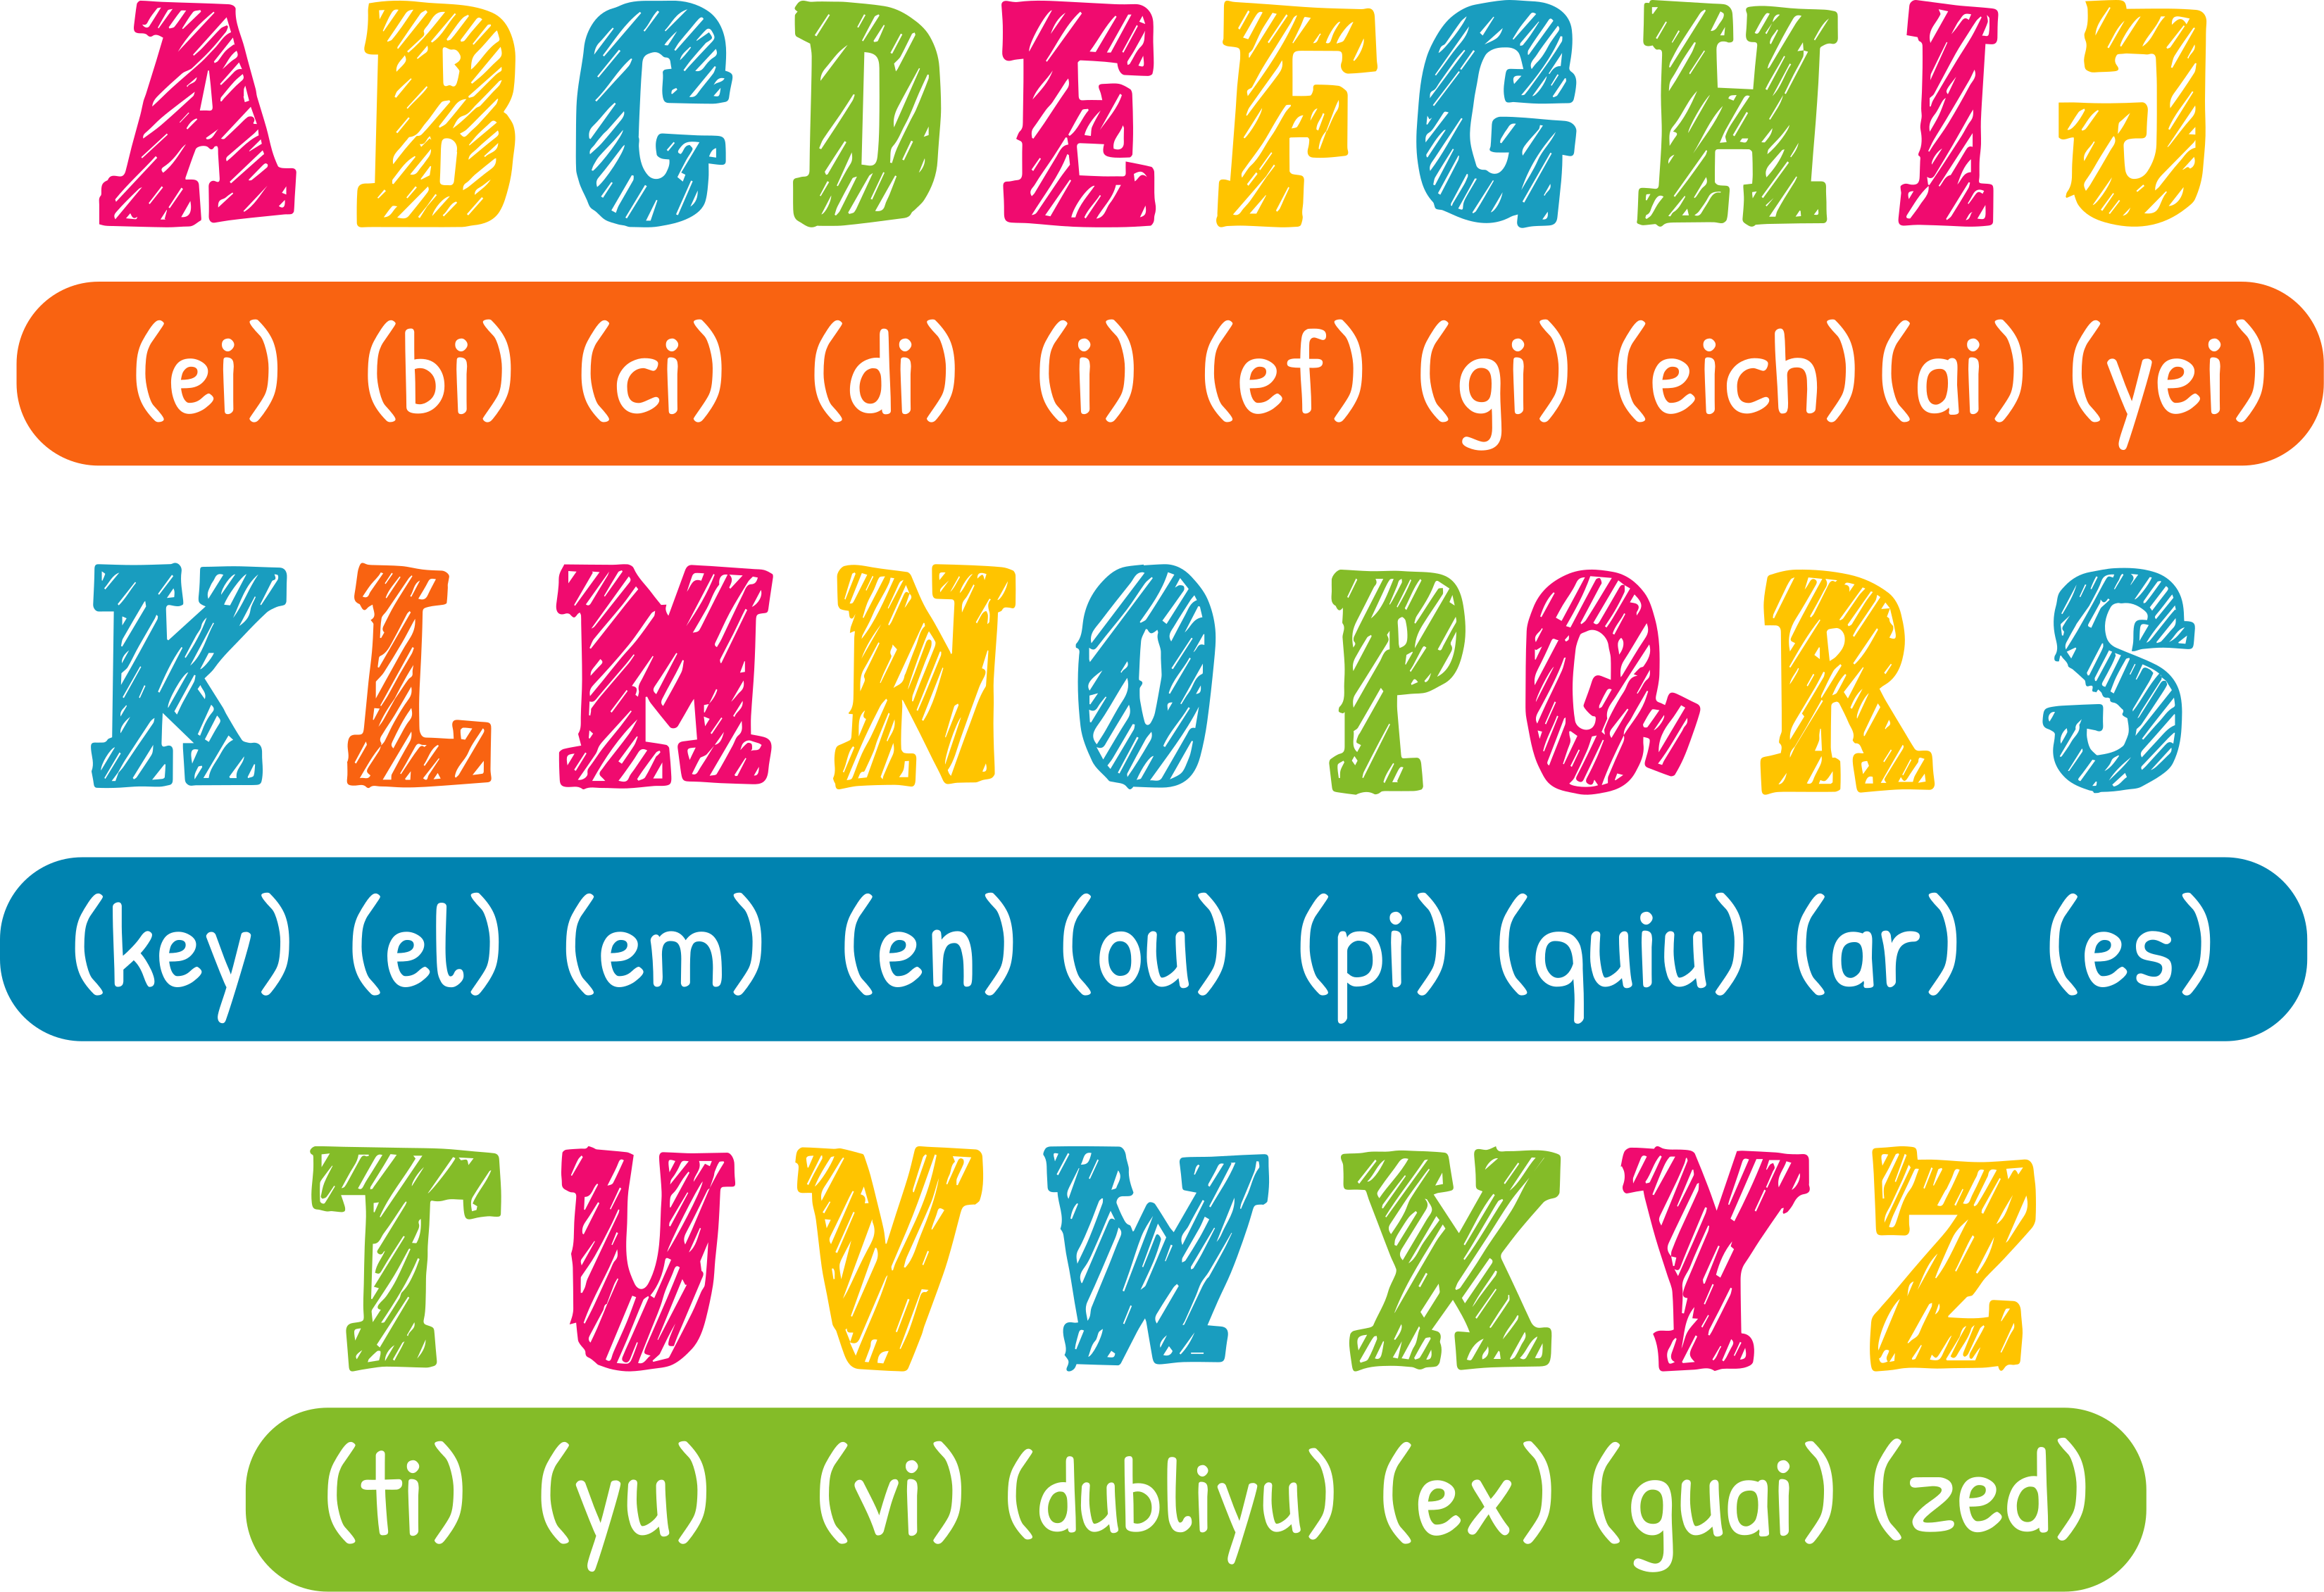 english-alphabet-pronunciation-alphabet-flashcard-for-kindergarten-kids